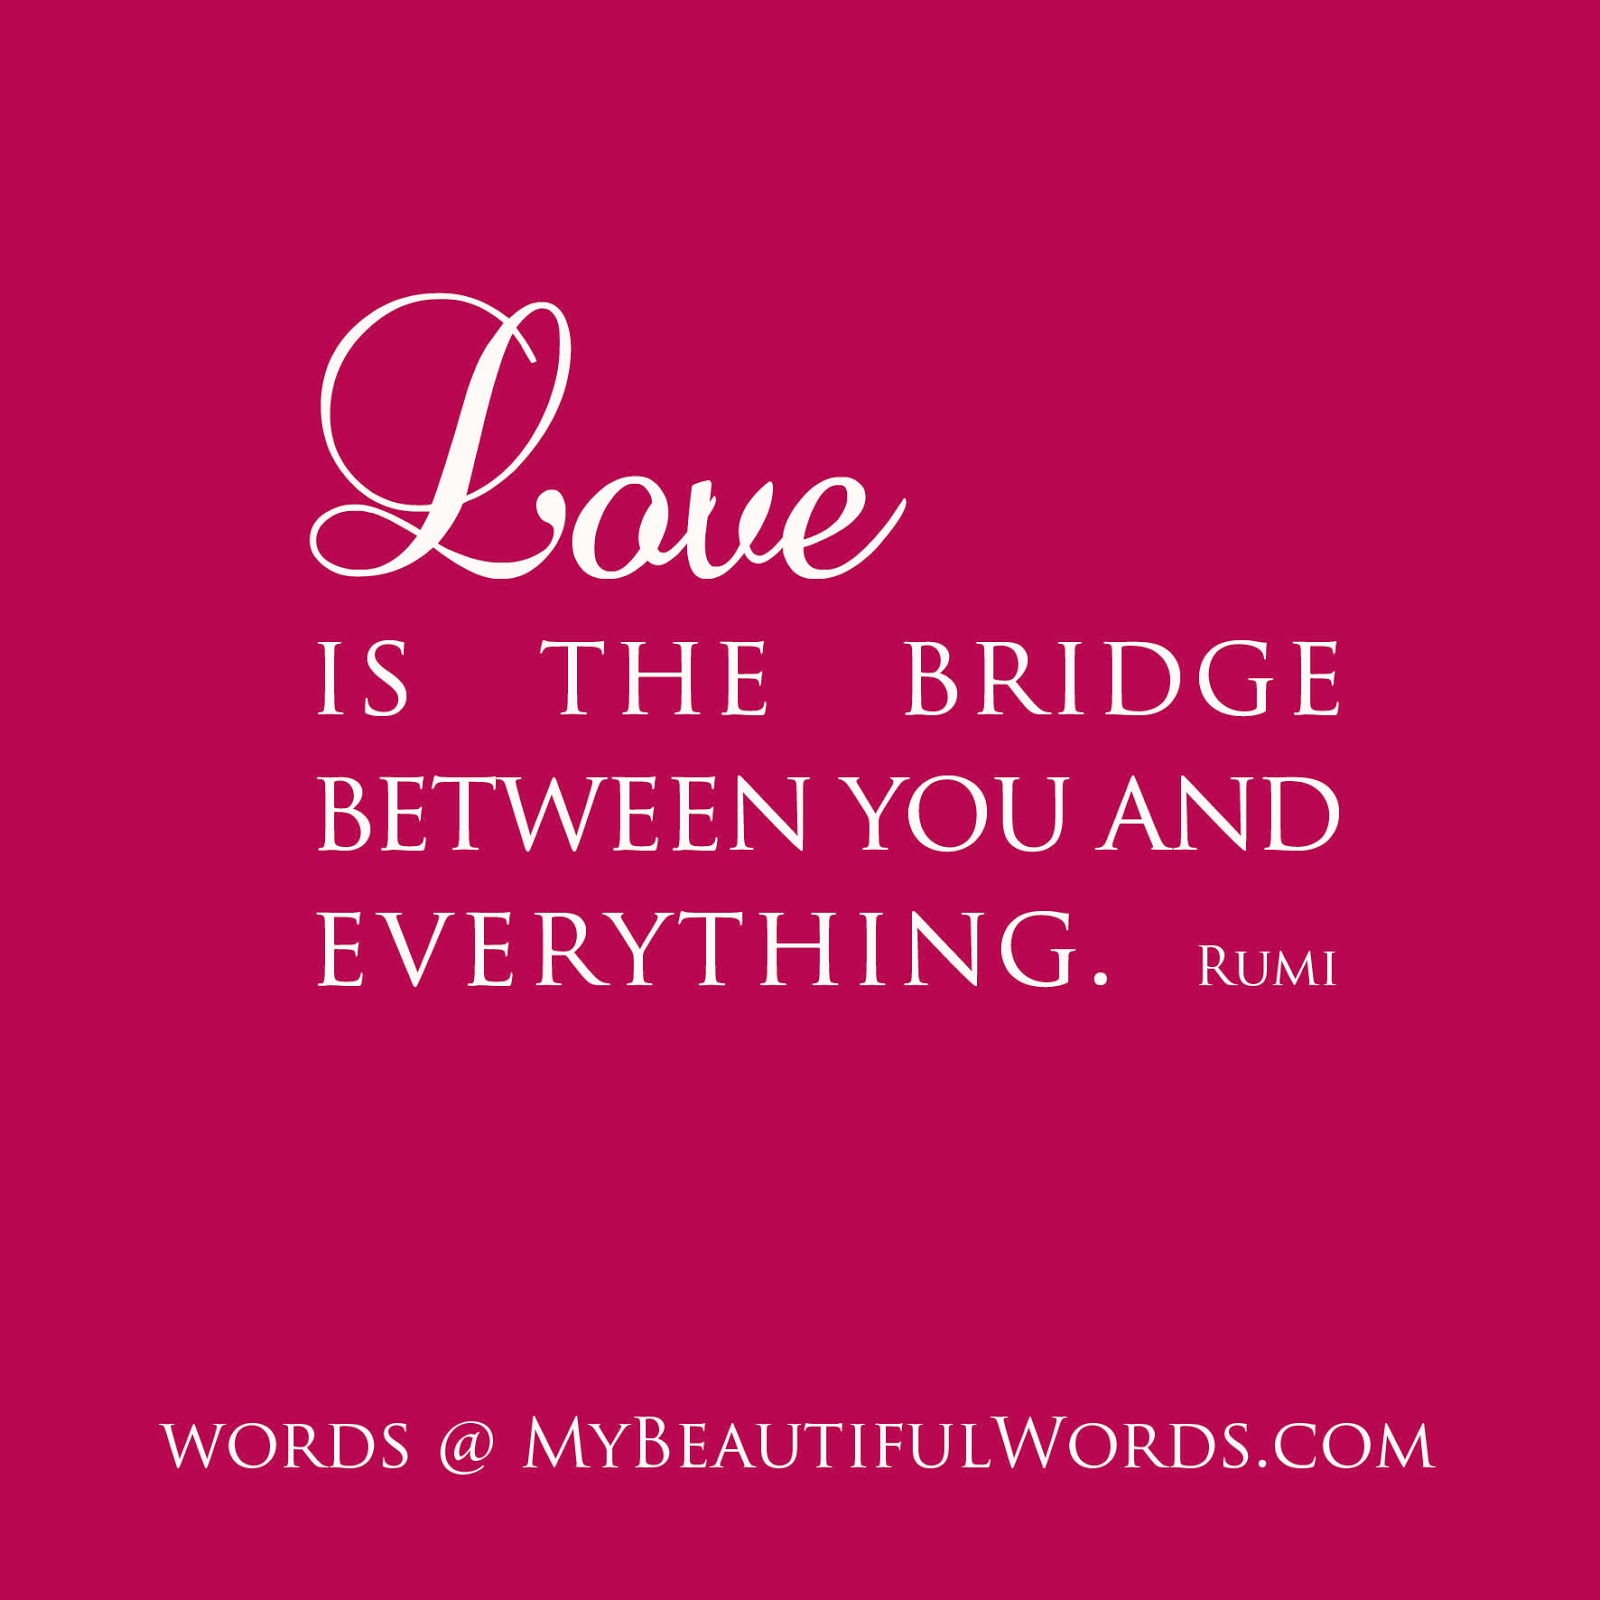 Rumi+-+The+Bridge.jpg